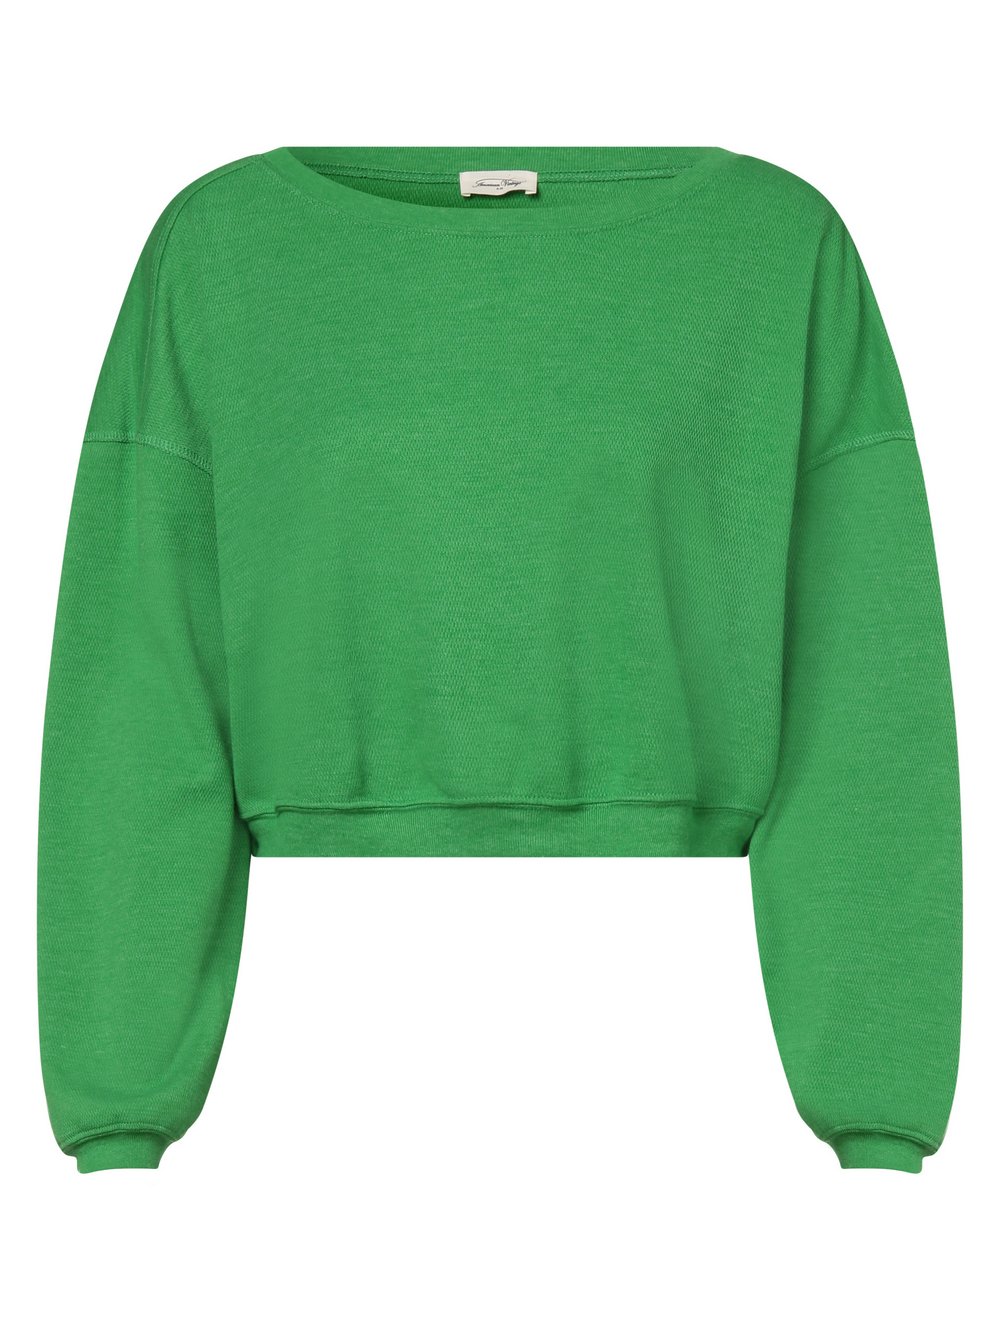 american vintage - Damska bluza nierozpinana – Lebow, zielony